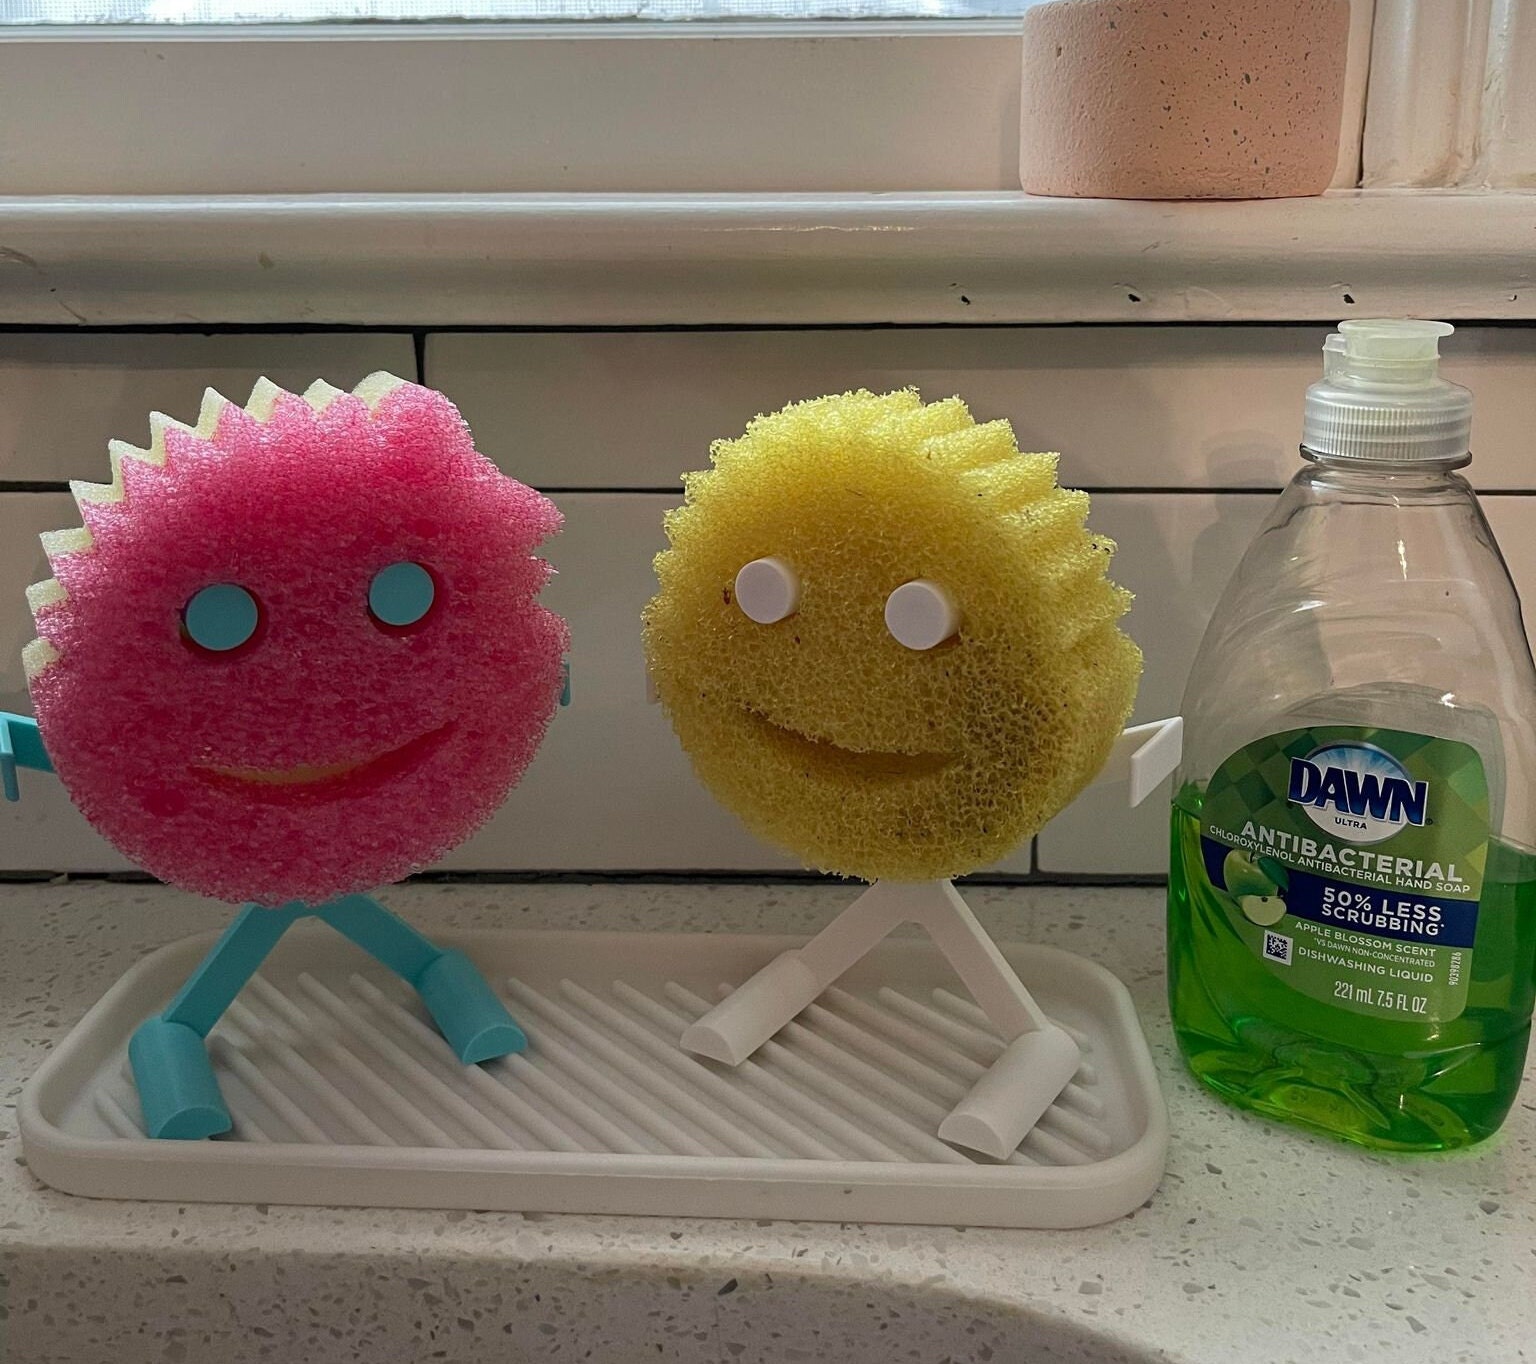 Scrub Daddy/mommy Sponge Person Holder 